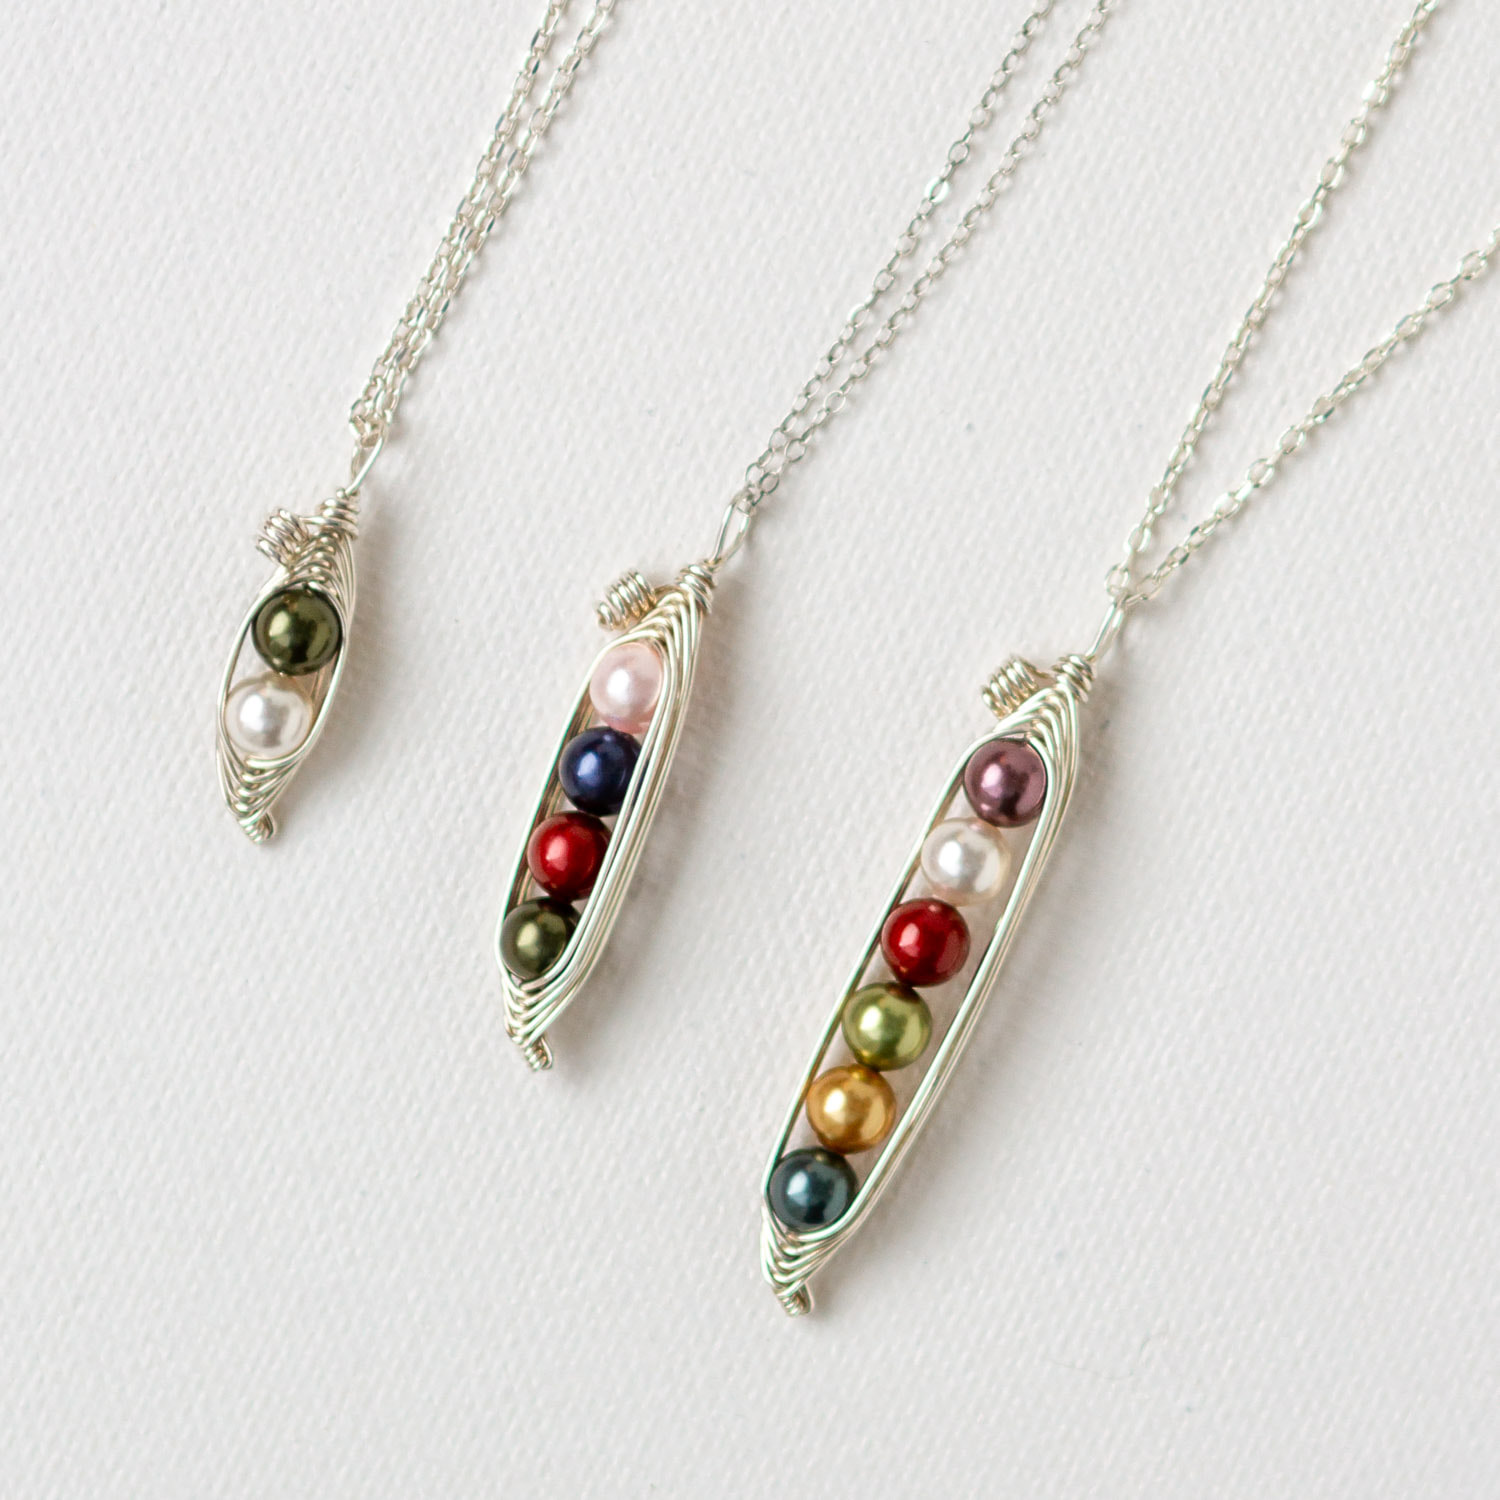 Four peas in a pod necklace – Rising Jewelry by Kiona Elliott